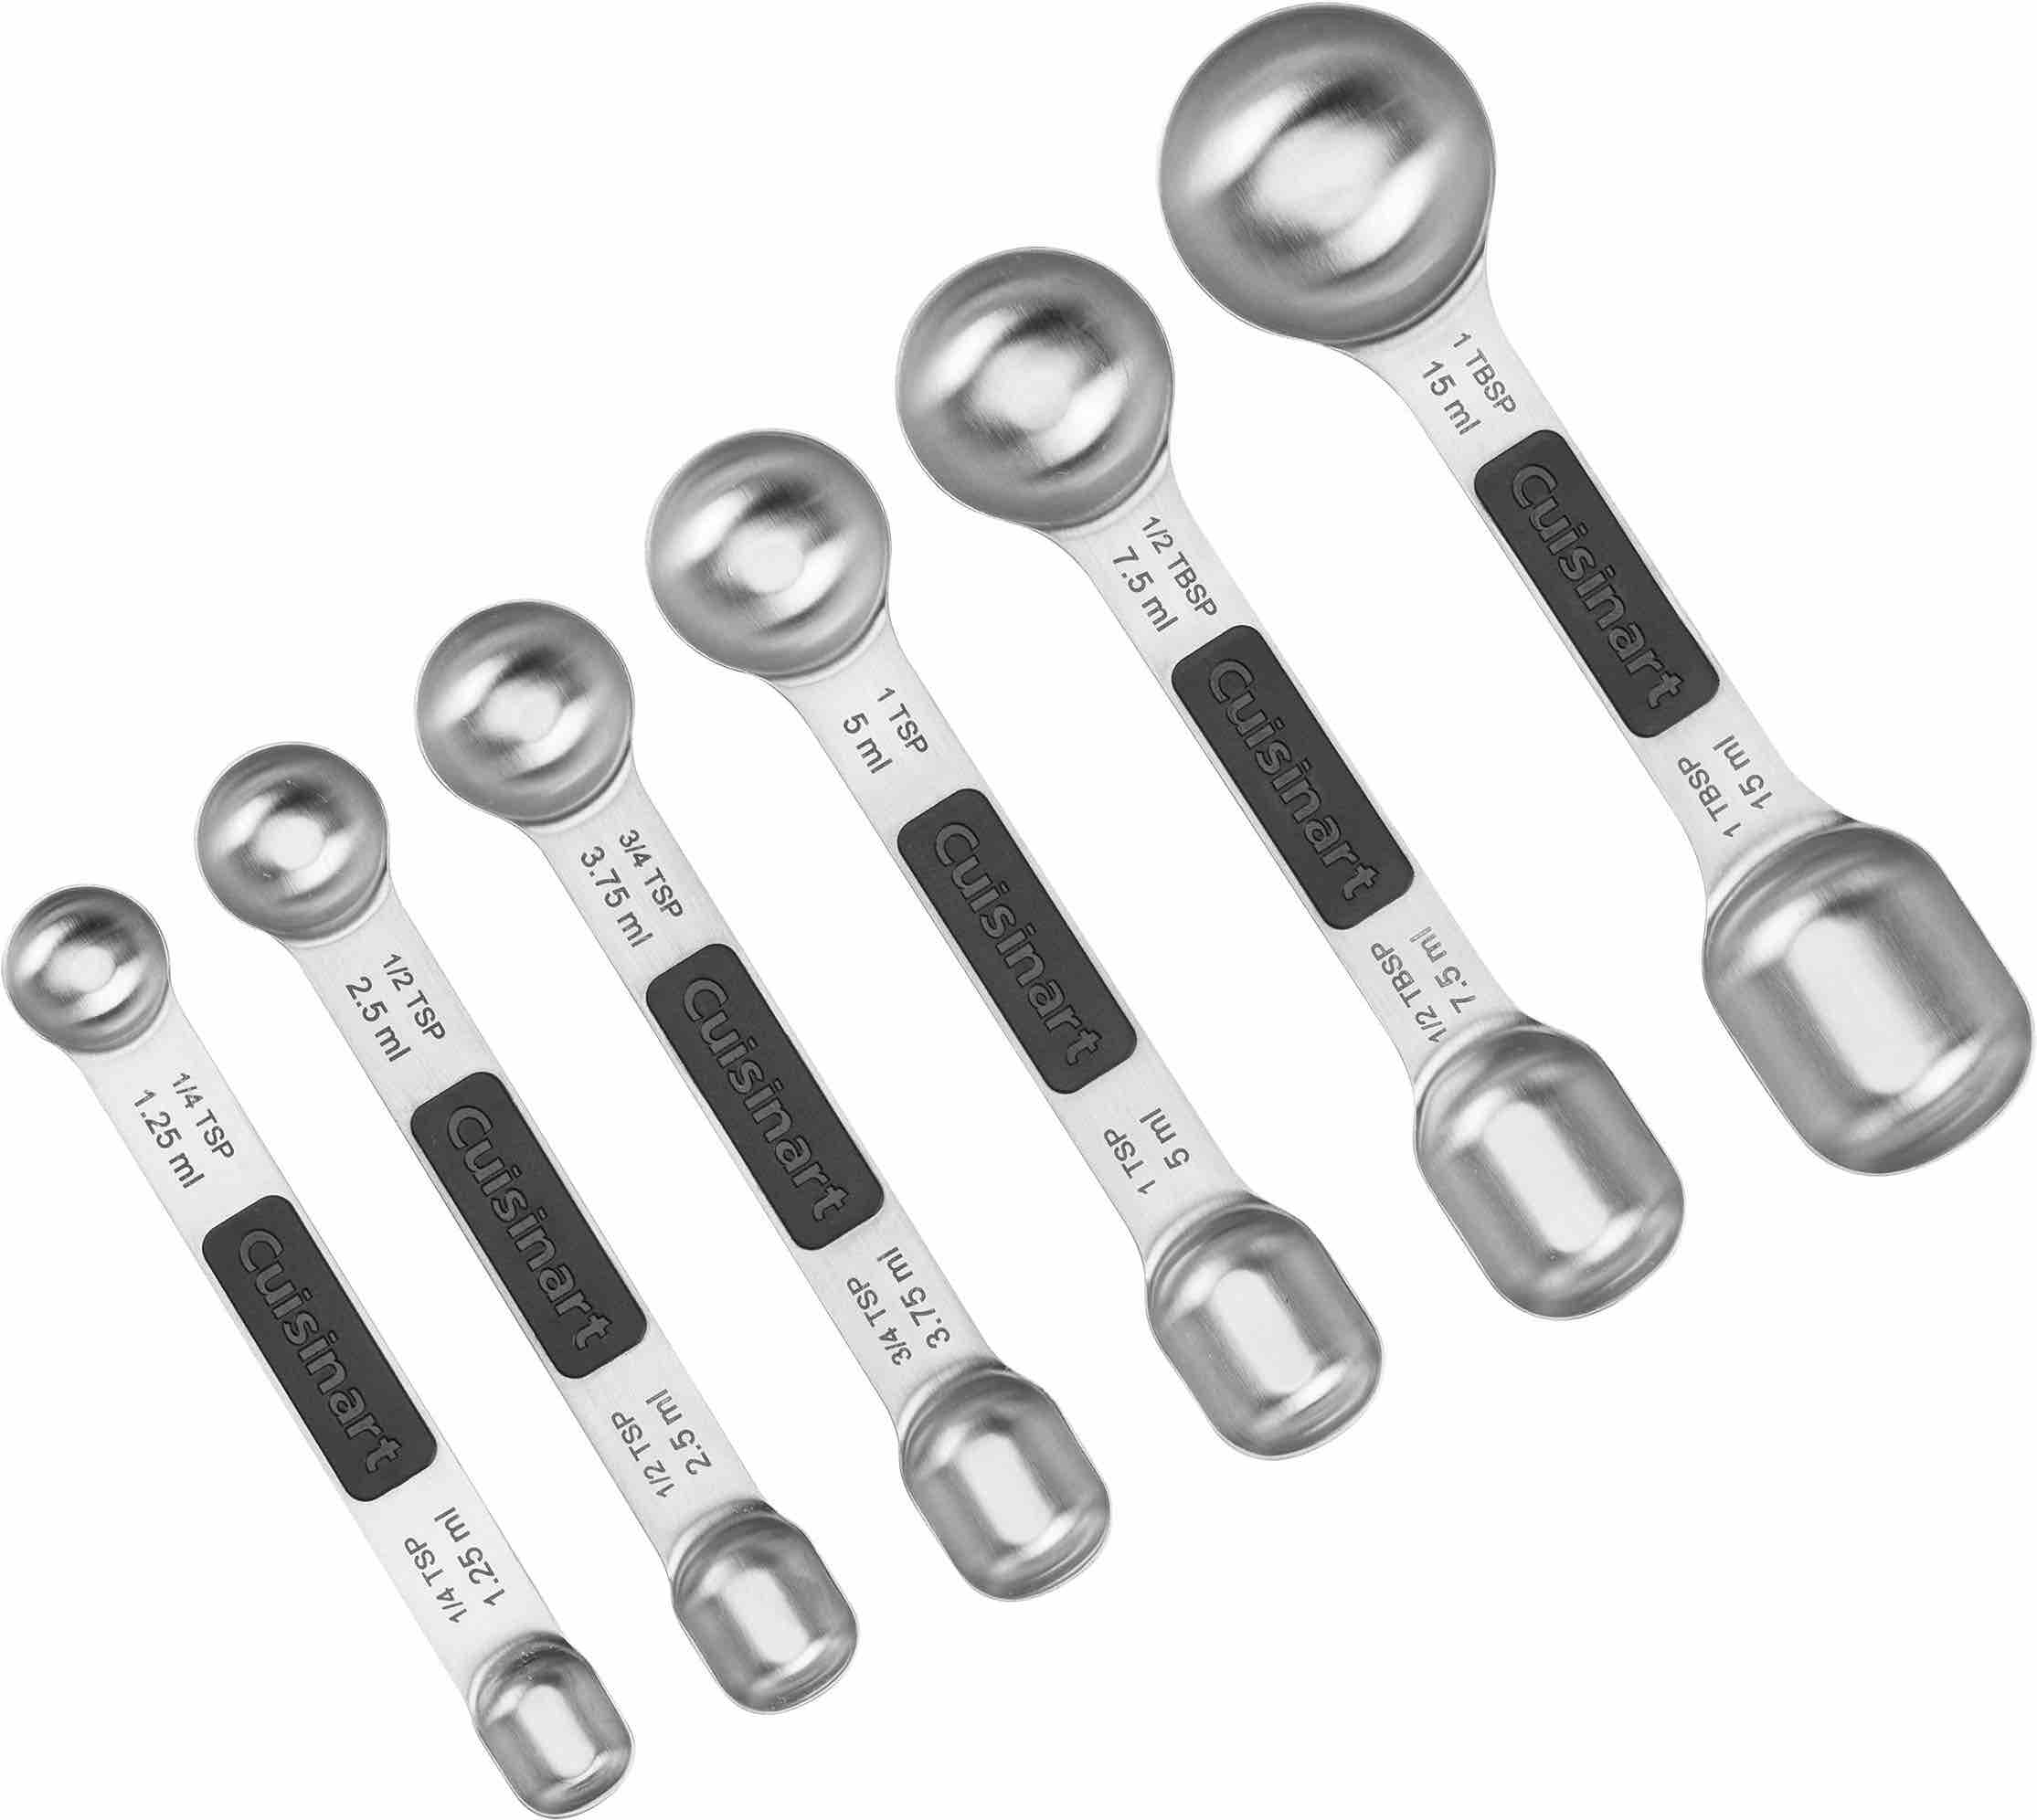 Norpro Measuring Spoons Magnetic 1 Tsp & 1 Tbsp